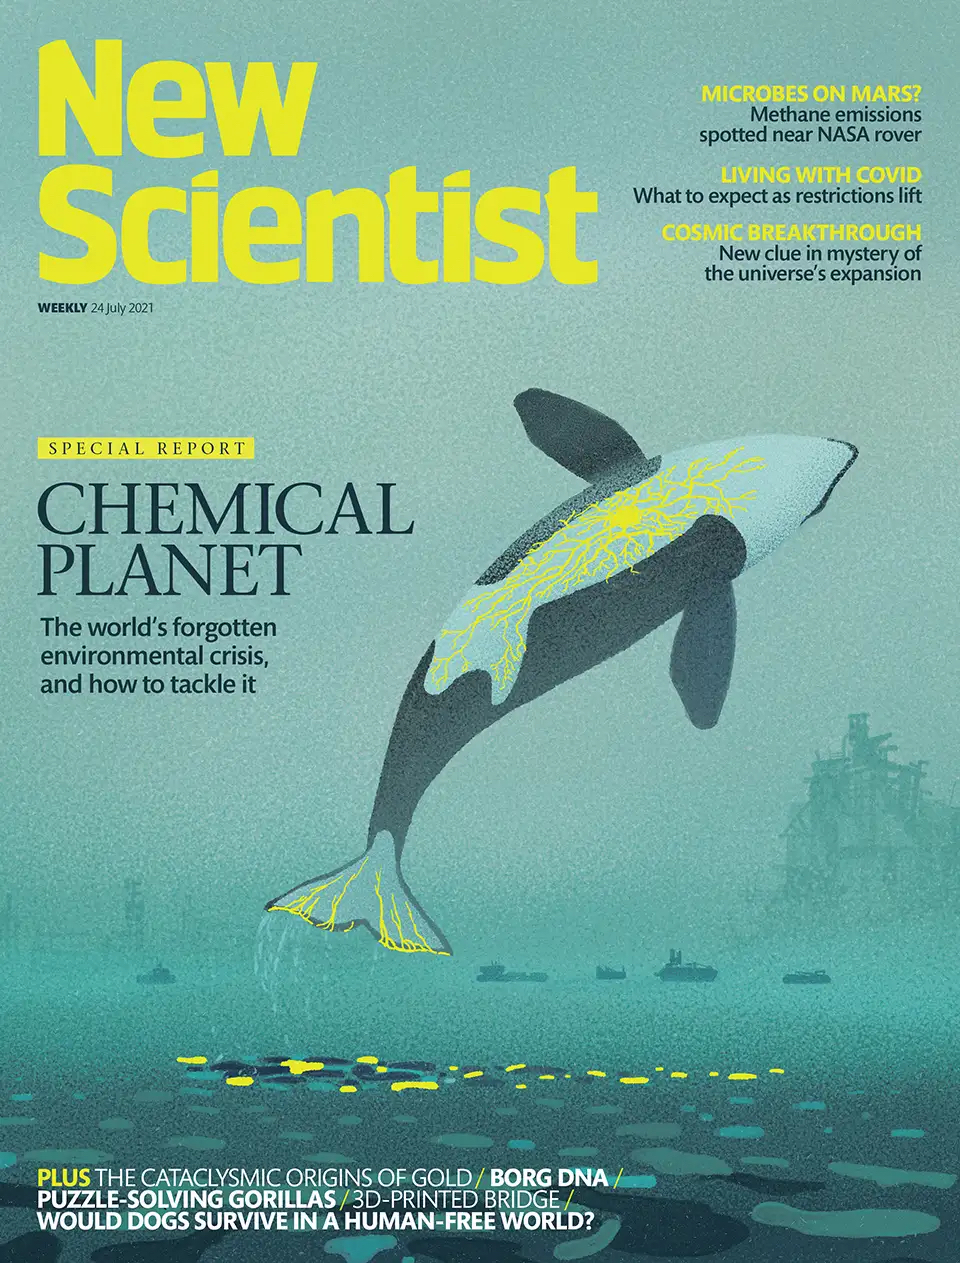 New Scientist - Chemical Planet.jpg